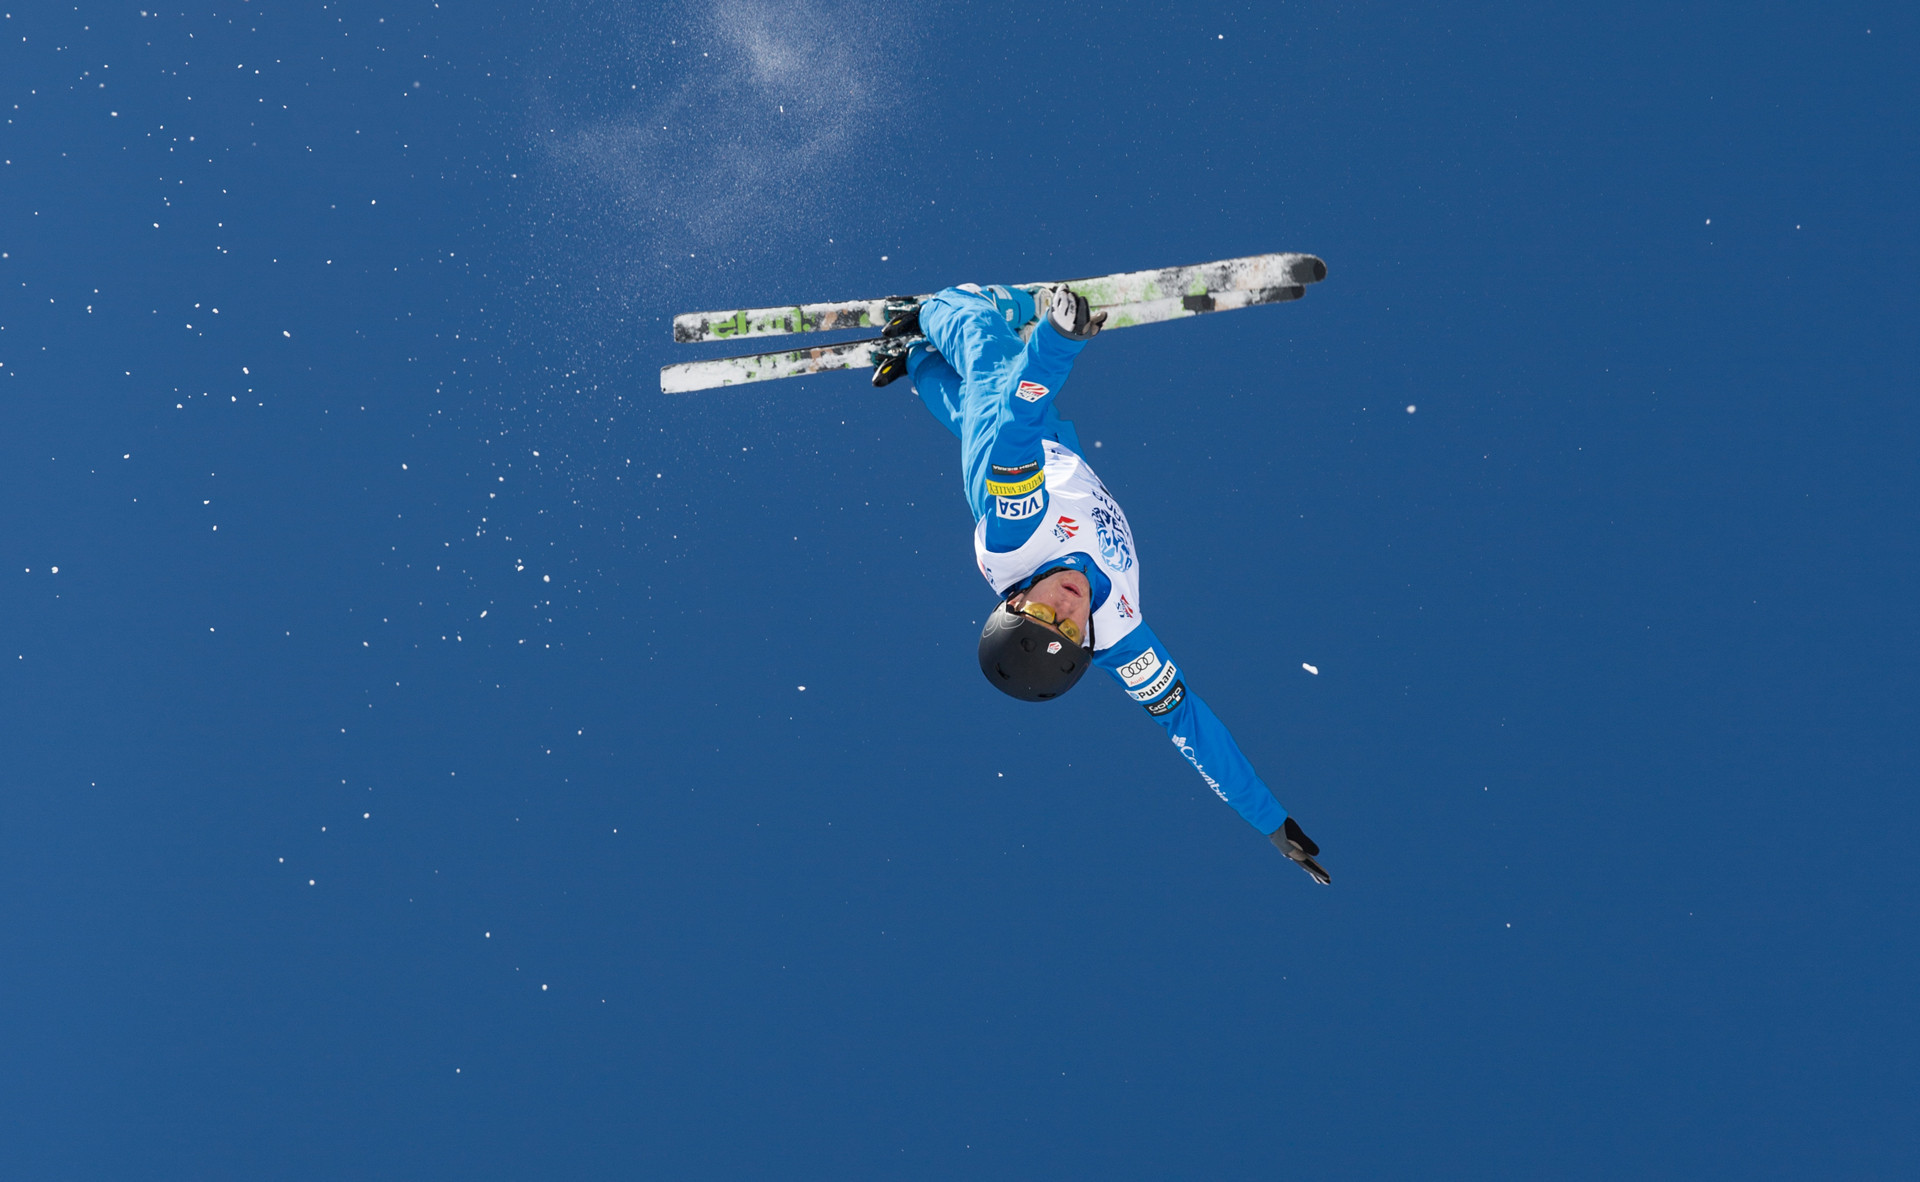 Bristol Mountain skiier Chris Lillis won at the 2019 US Aerial Freestyle Championships ©USSA